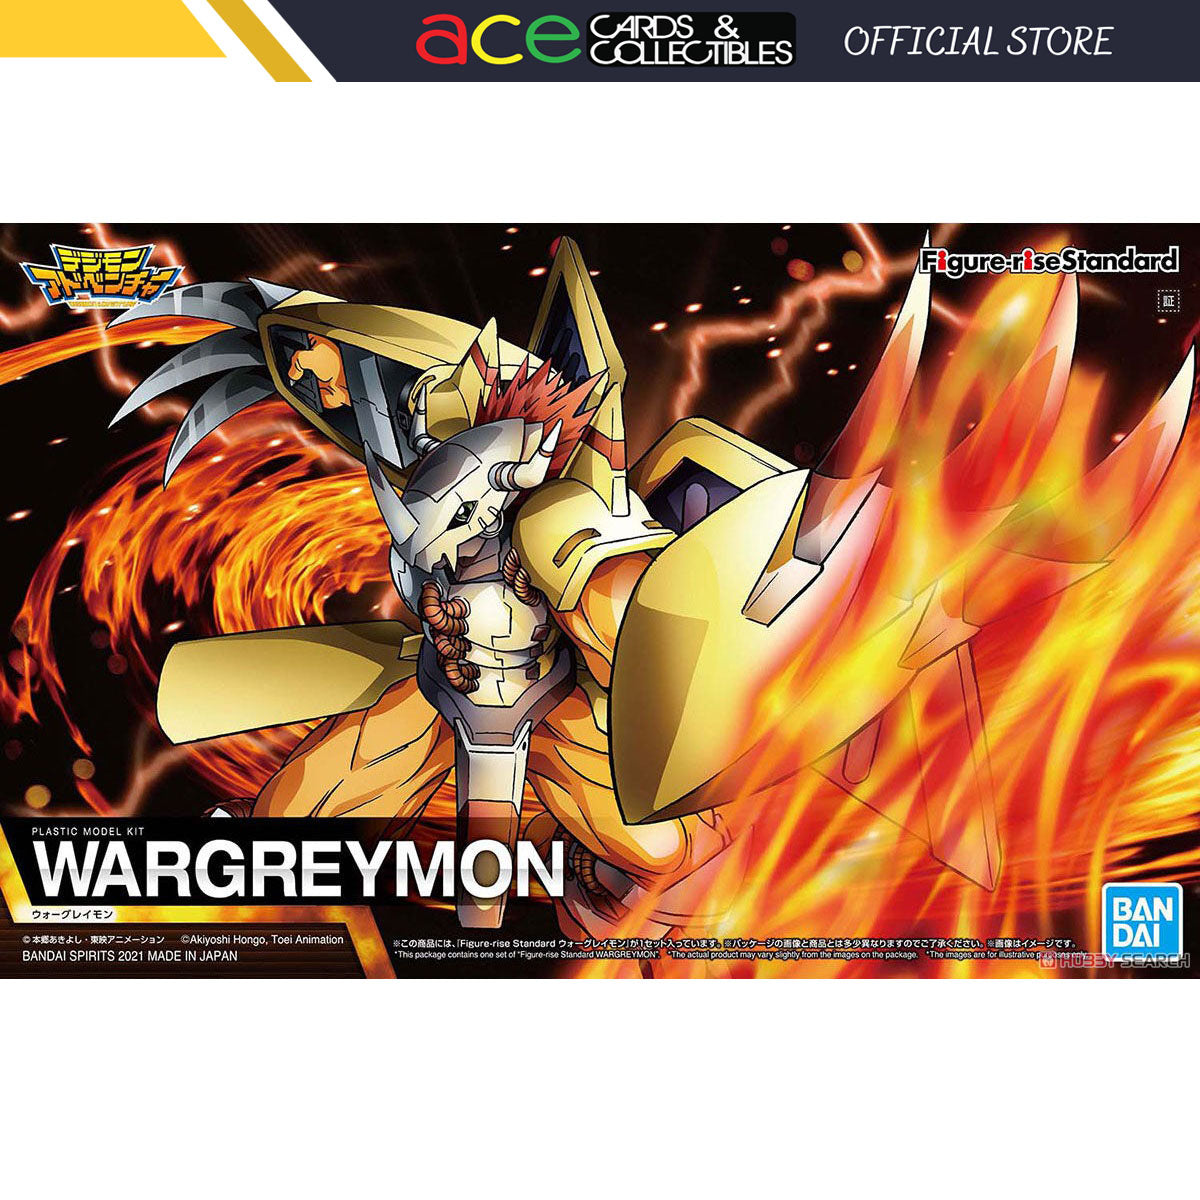 Digimon Figure-rise Standard Wargreymon-Bandai-Ace Cards & Collectibles